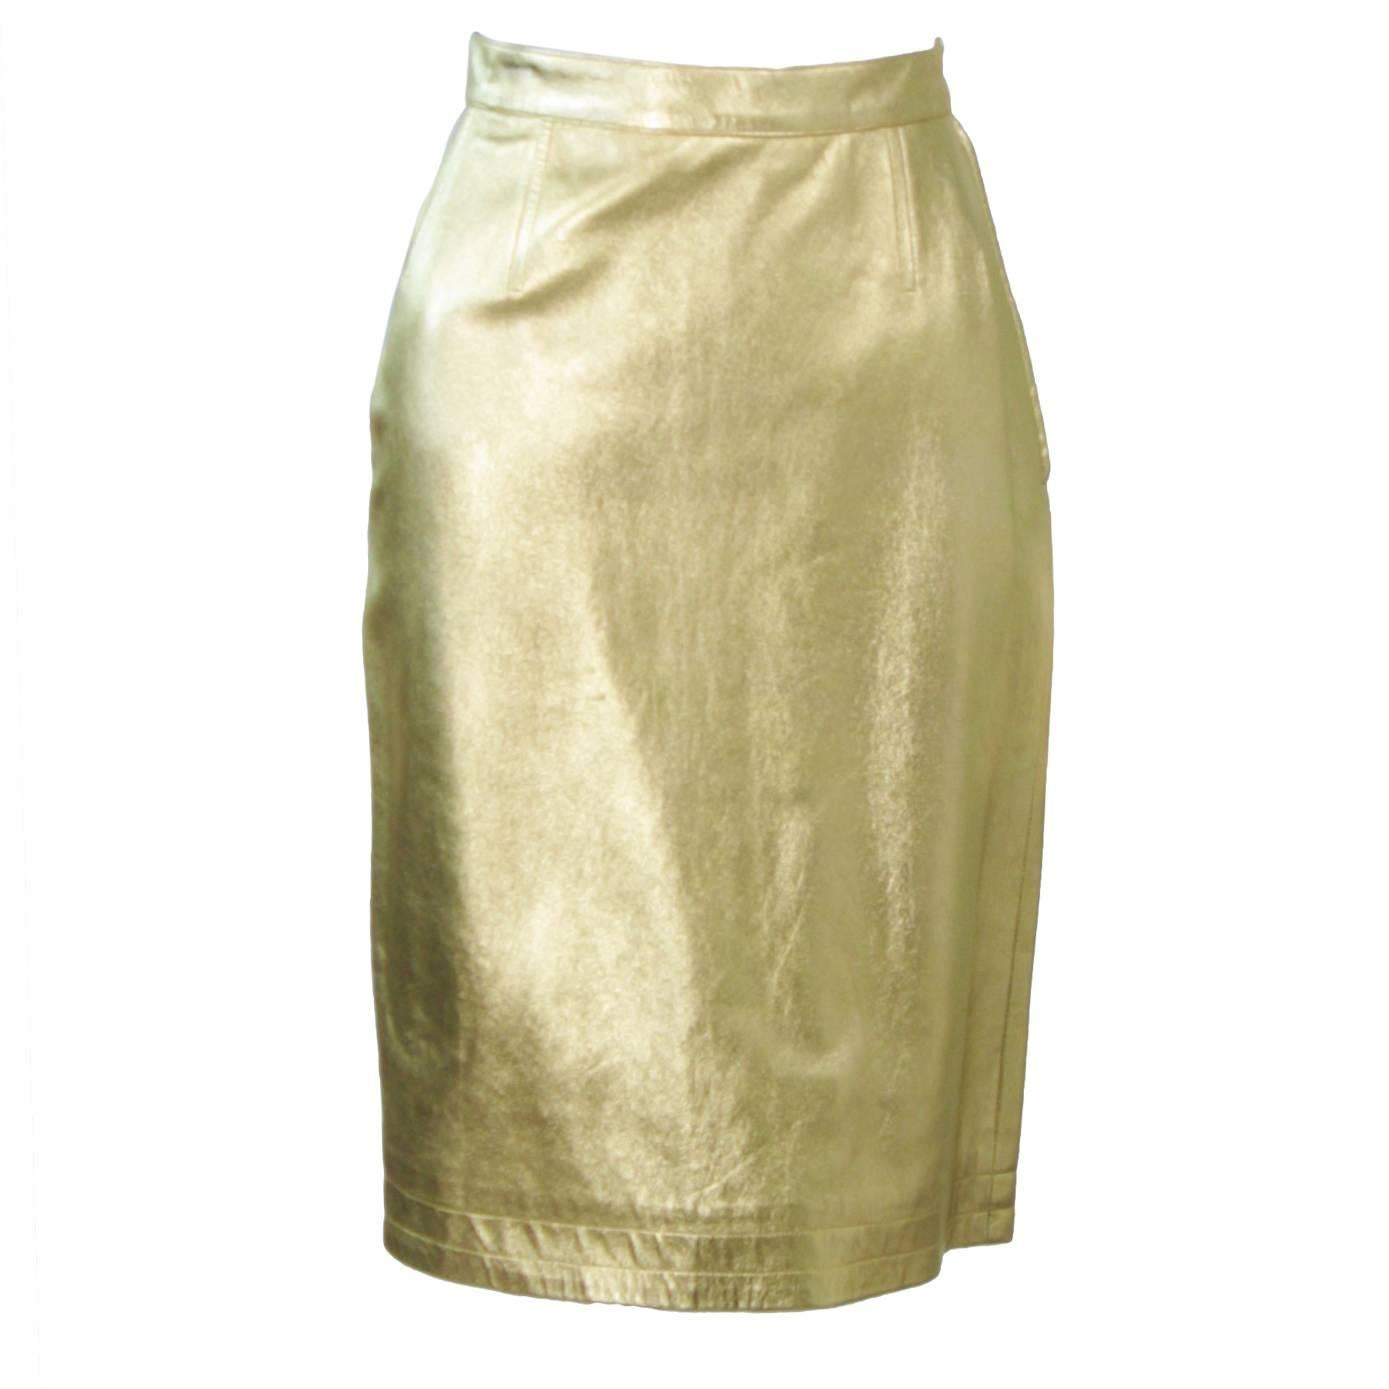 YVES SAINT LAURENT Gold Foil Metallic Leather Pencil Skirt Size 42 For Sale